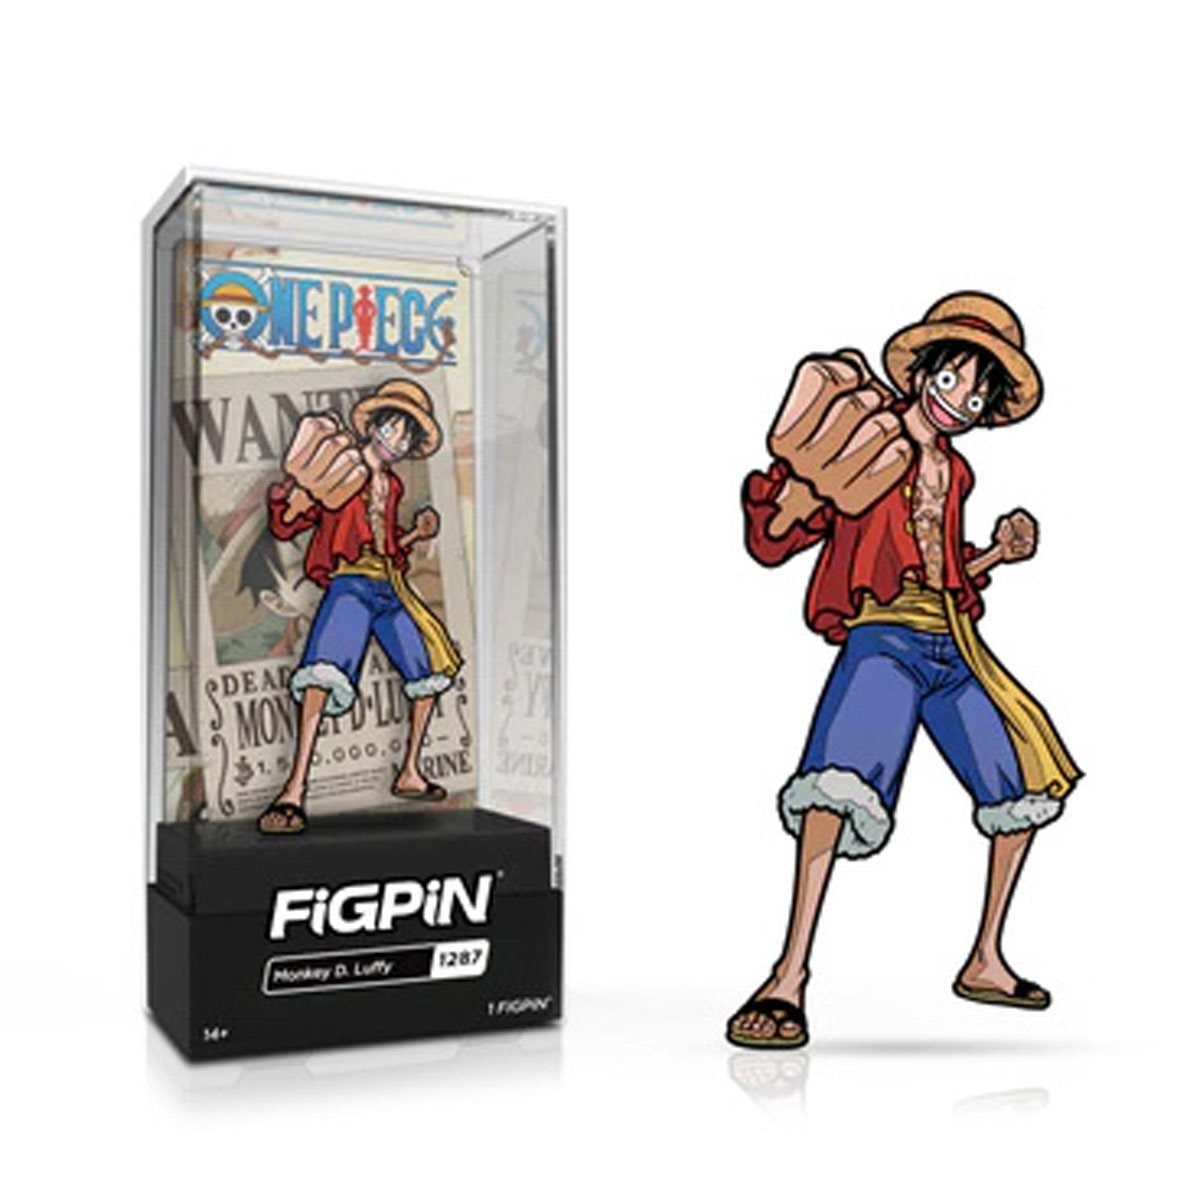 Enel One Piece Wiki Gifts & Merchandise for Sale, goro goro no mi